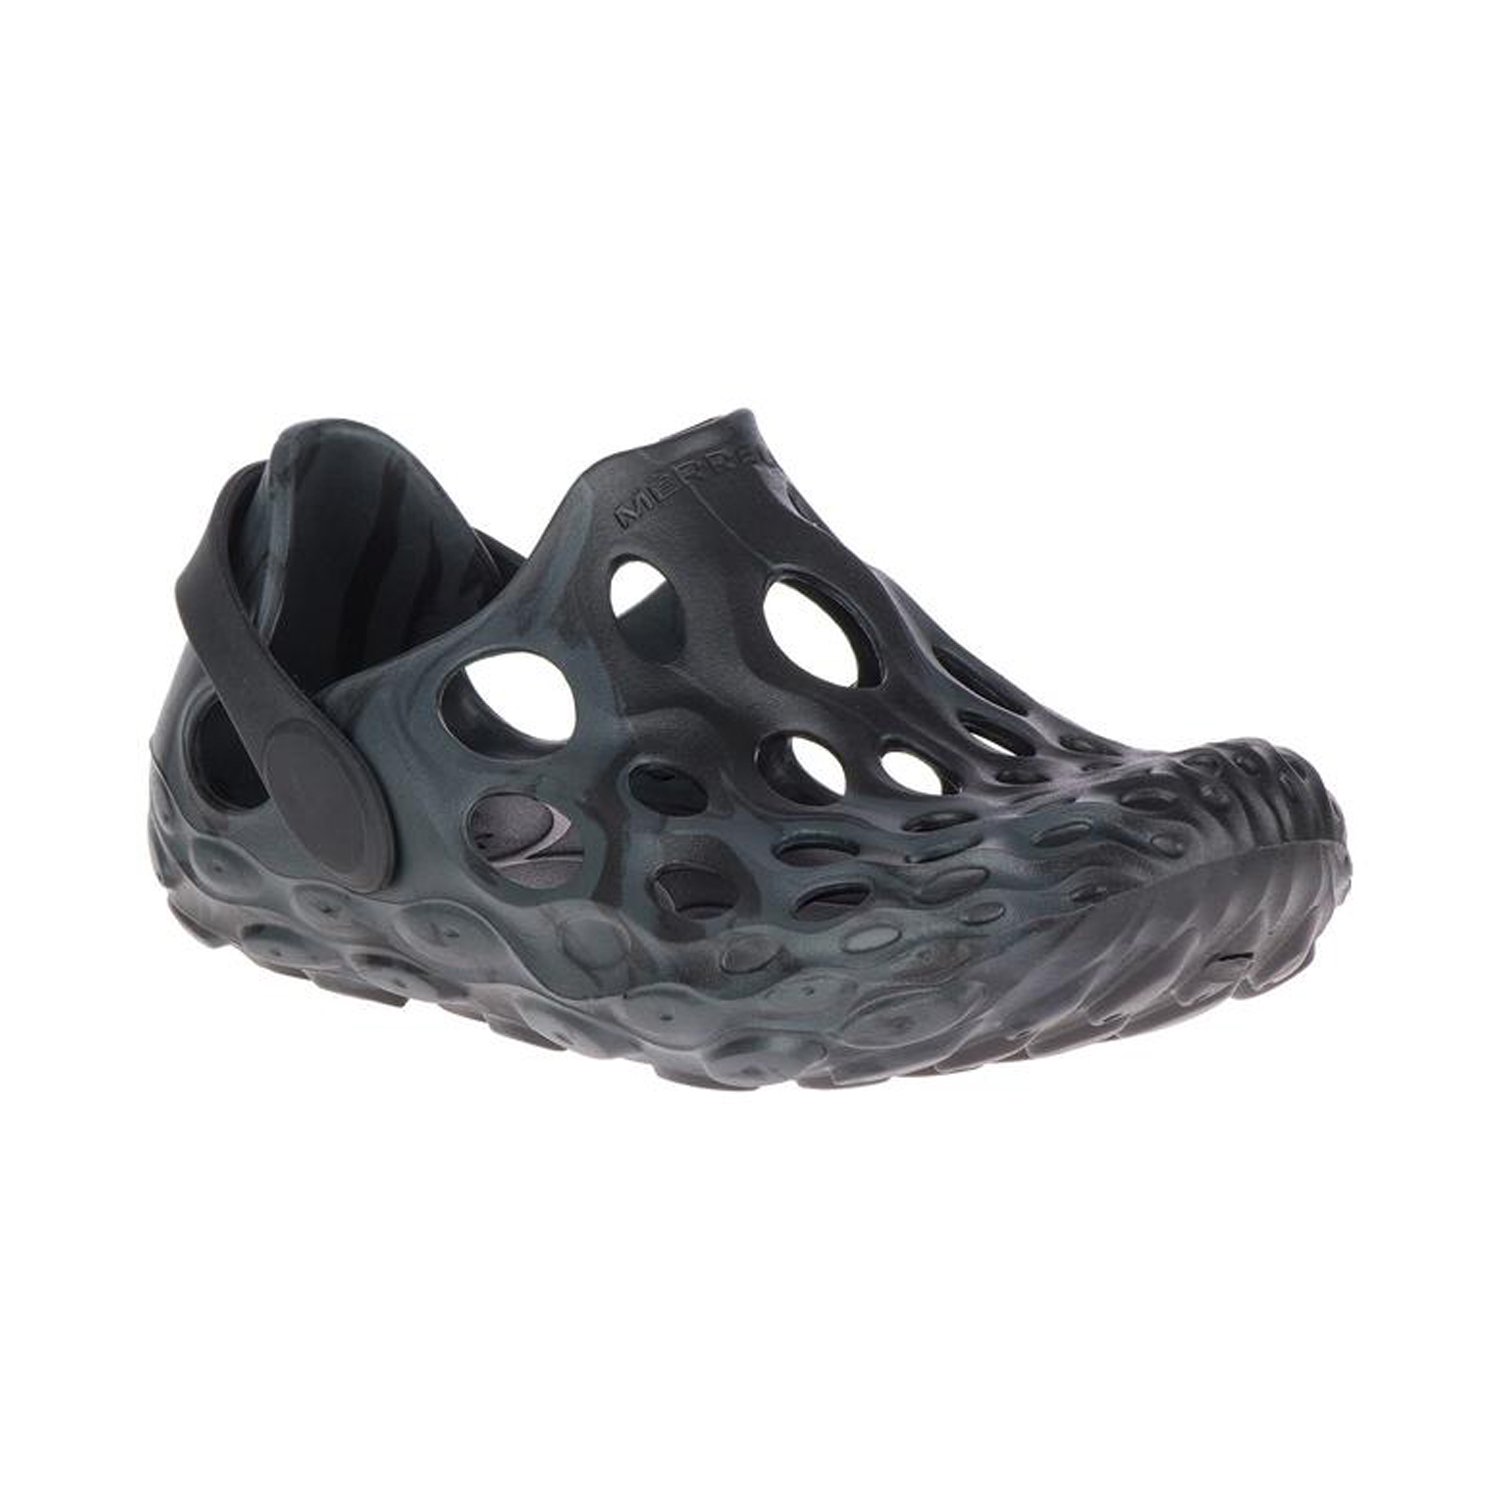 Merrell Hydro Moc Kadın Su Ayakkabısı - Siyah - 1